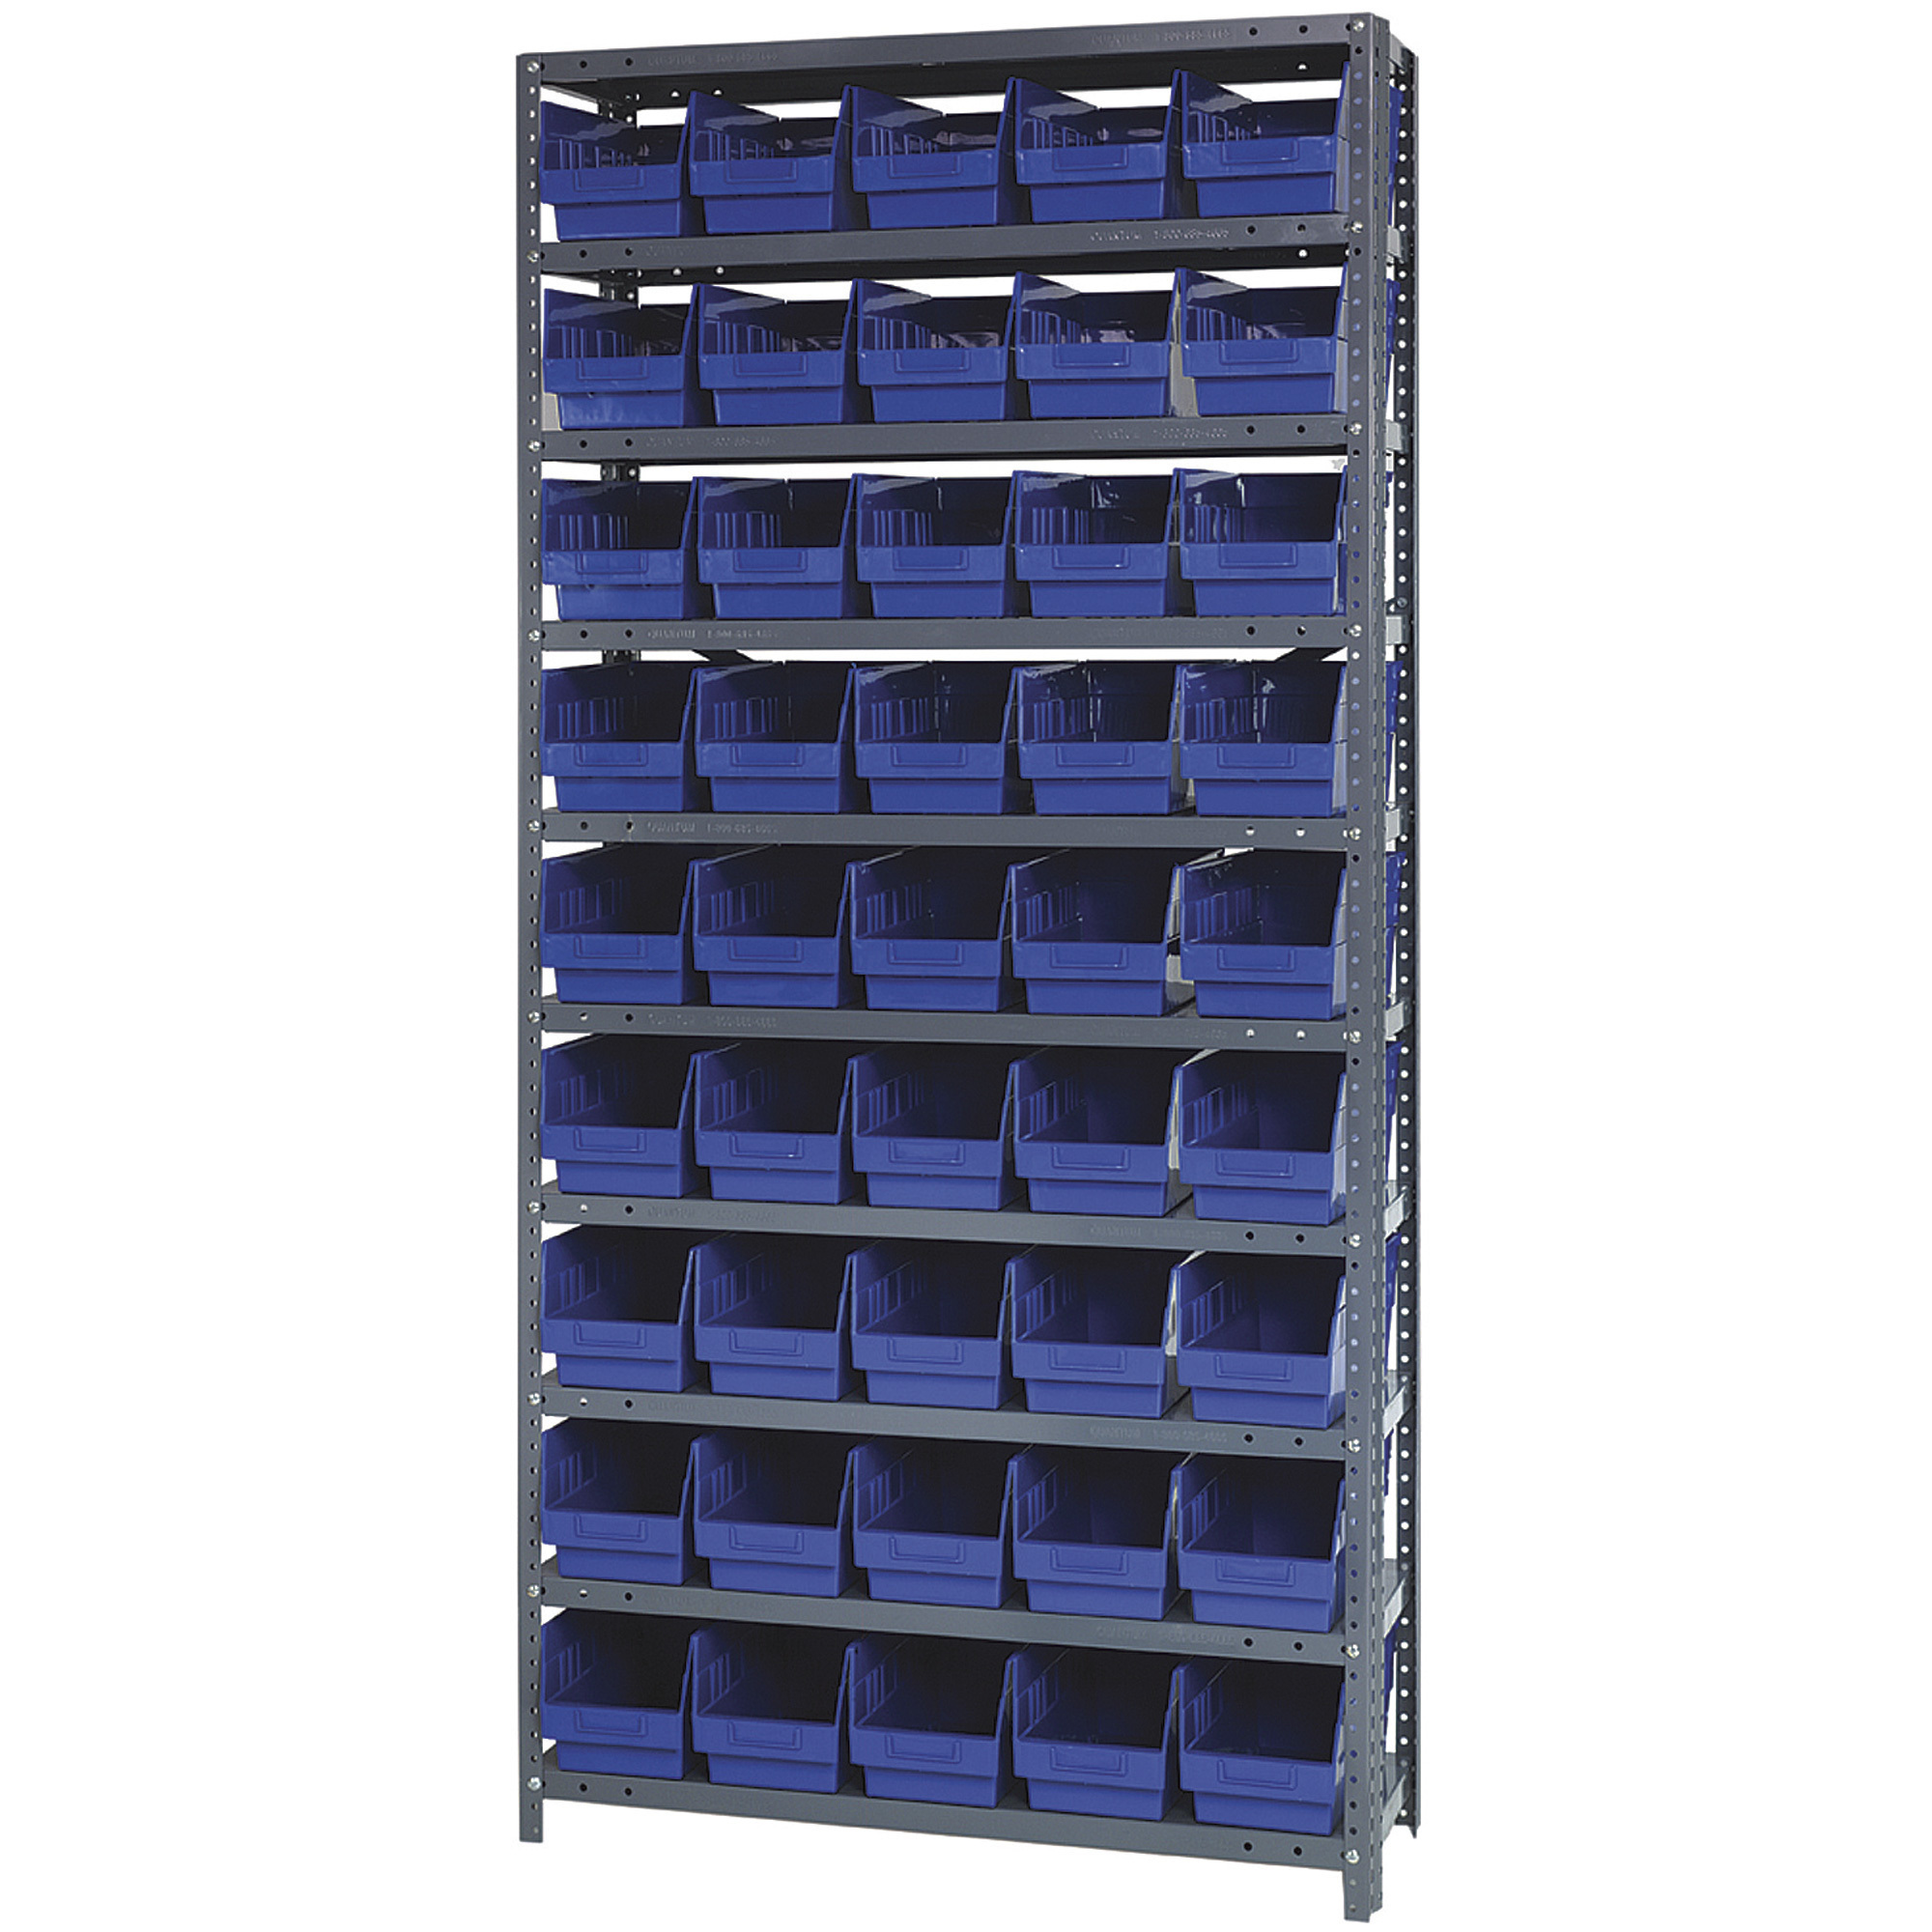 Quantum Storage Metal Shelving Unit with 45 Bins, 36Inch W x 12Inch D x 75Inch H, Blue, Model 1275-202BL